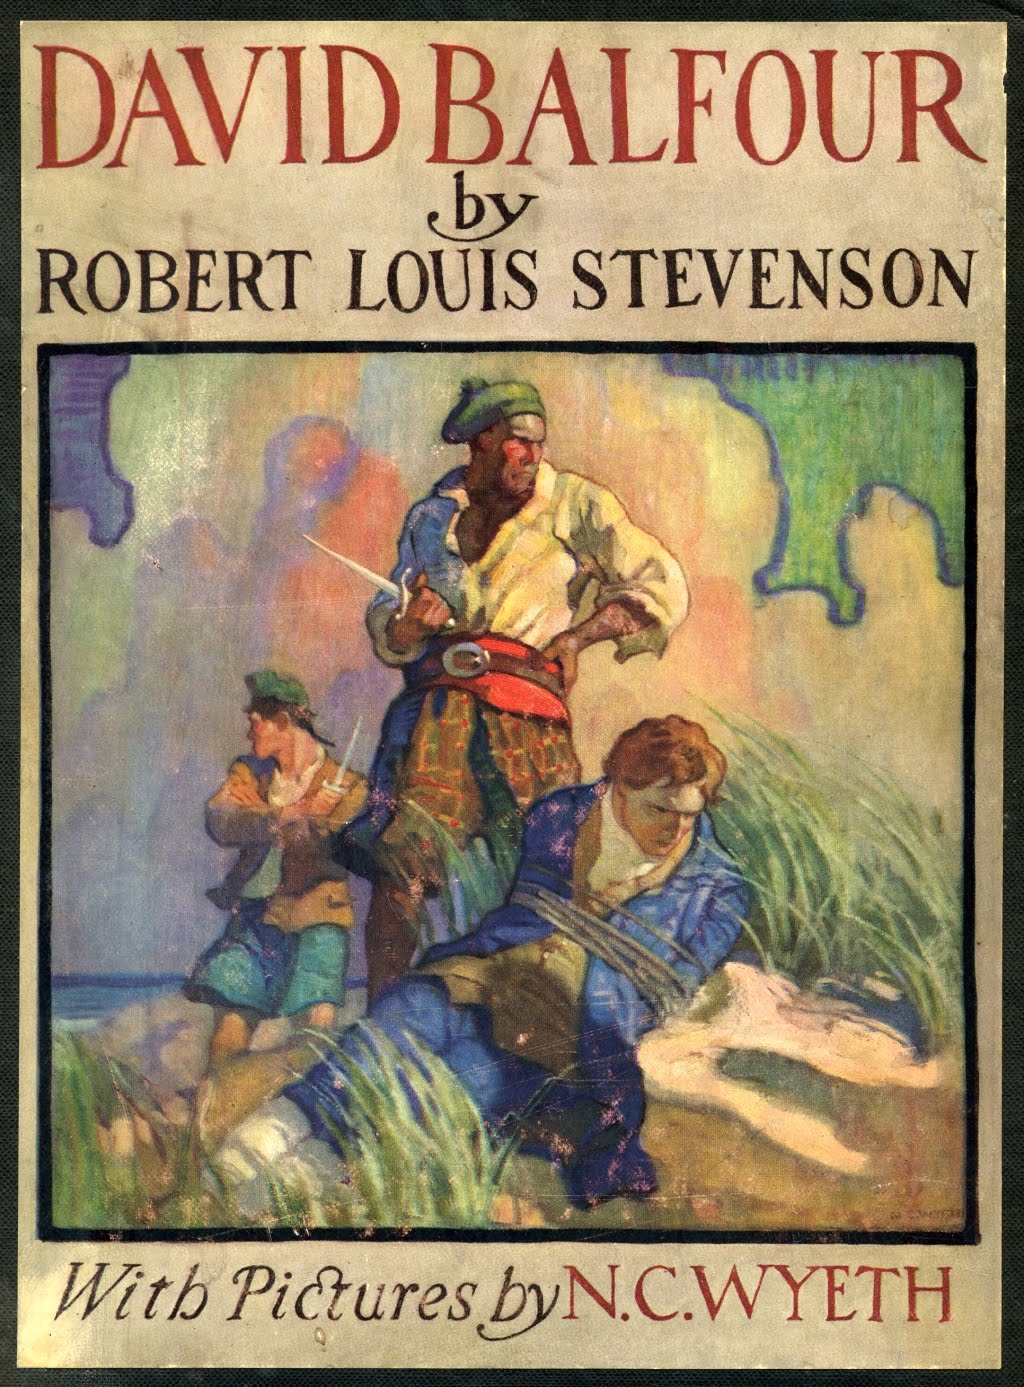 The Poetry of R.E. Slater: Robert Louis Stevenson - Requiem